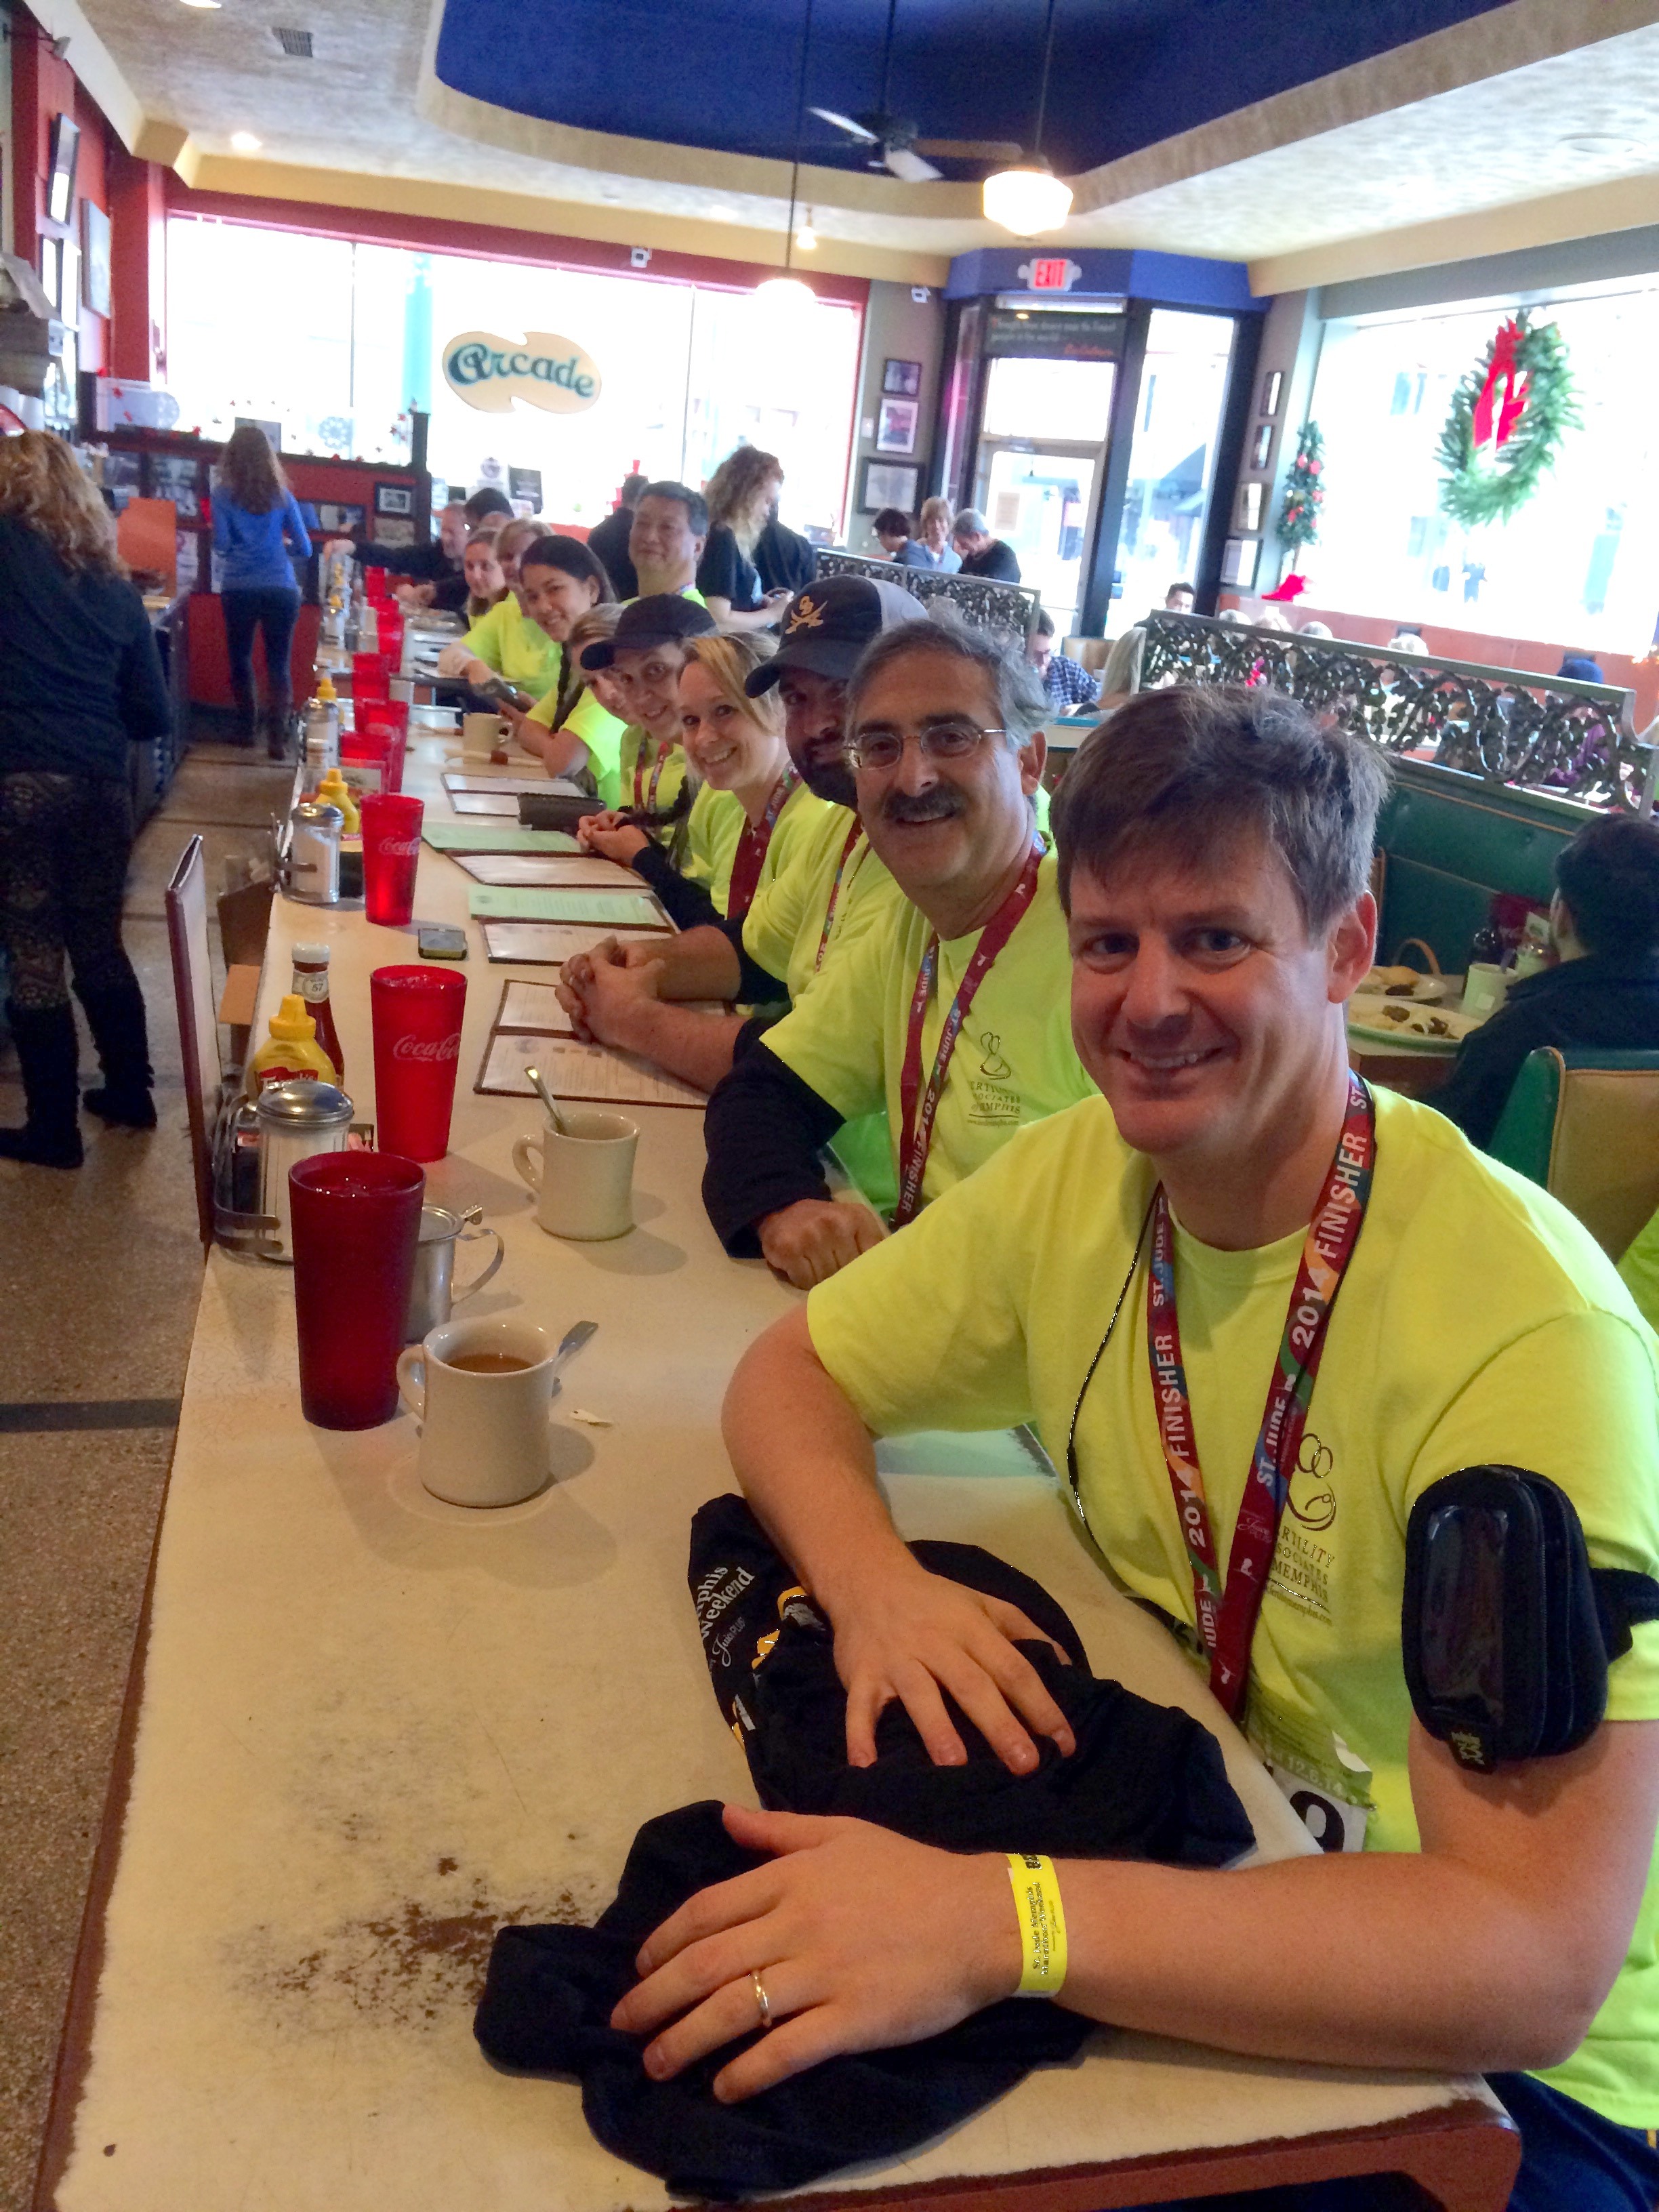 Post-race team breakfast at the Arcade restaurant in Memphis